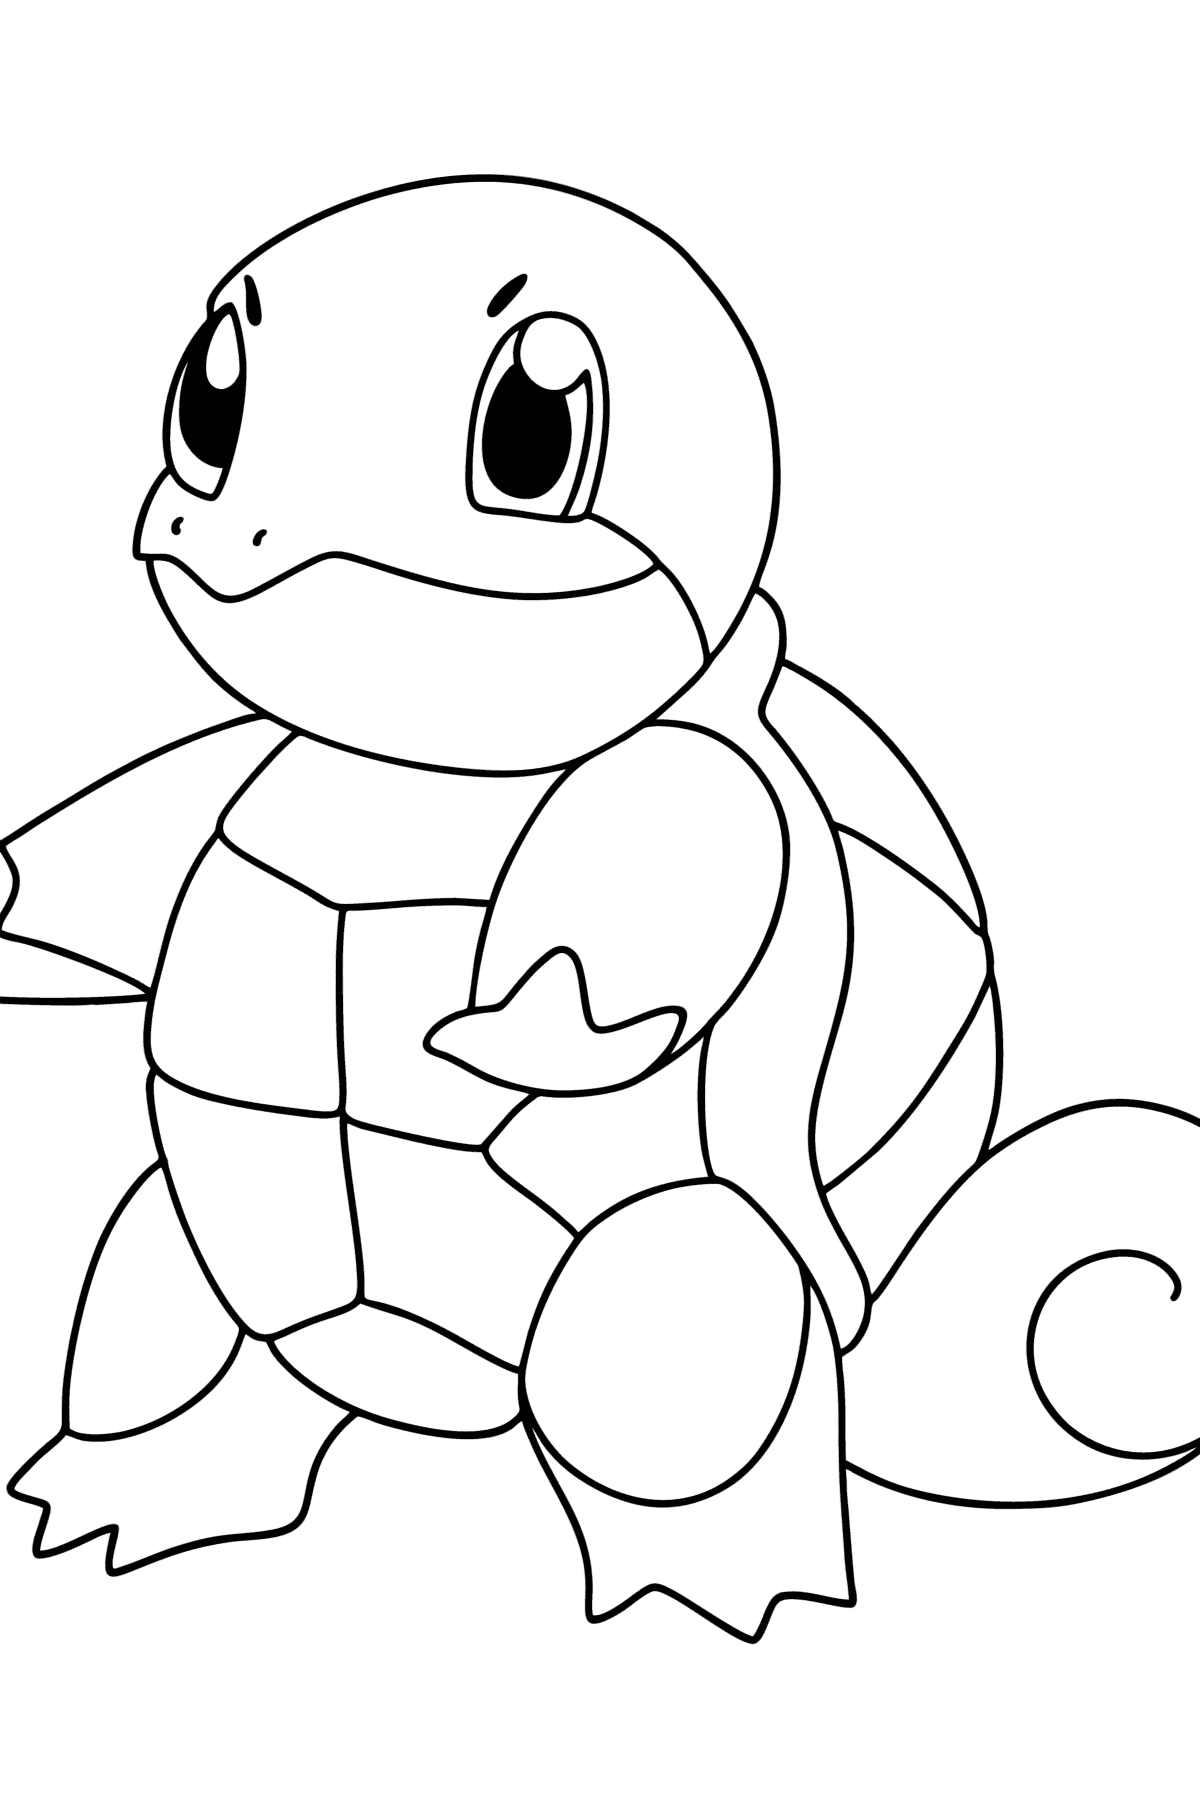 Tegning til fargelegging Pokémon Go Squirtle - Tegninger til fargelegging for barn